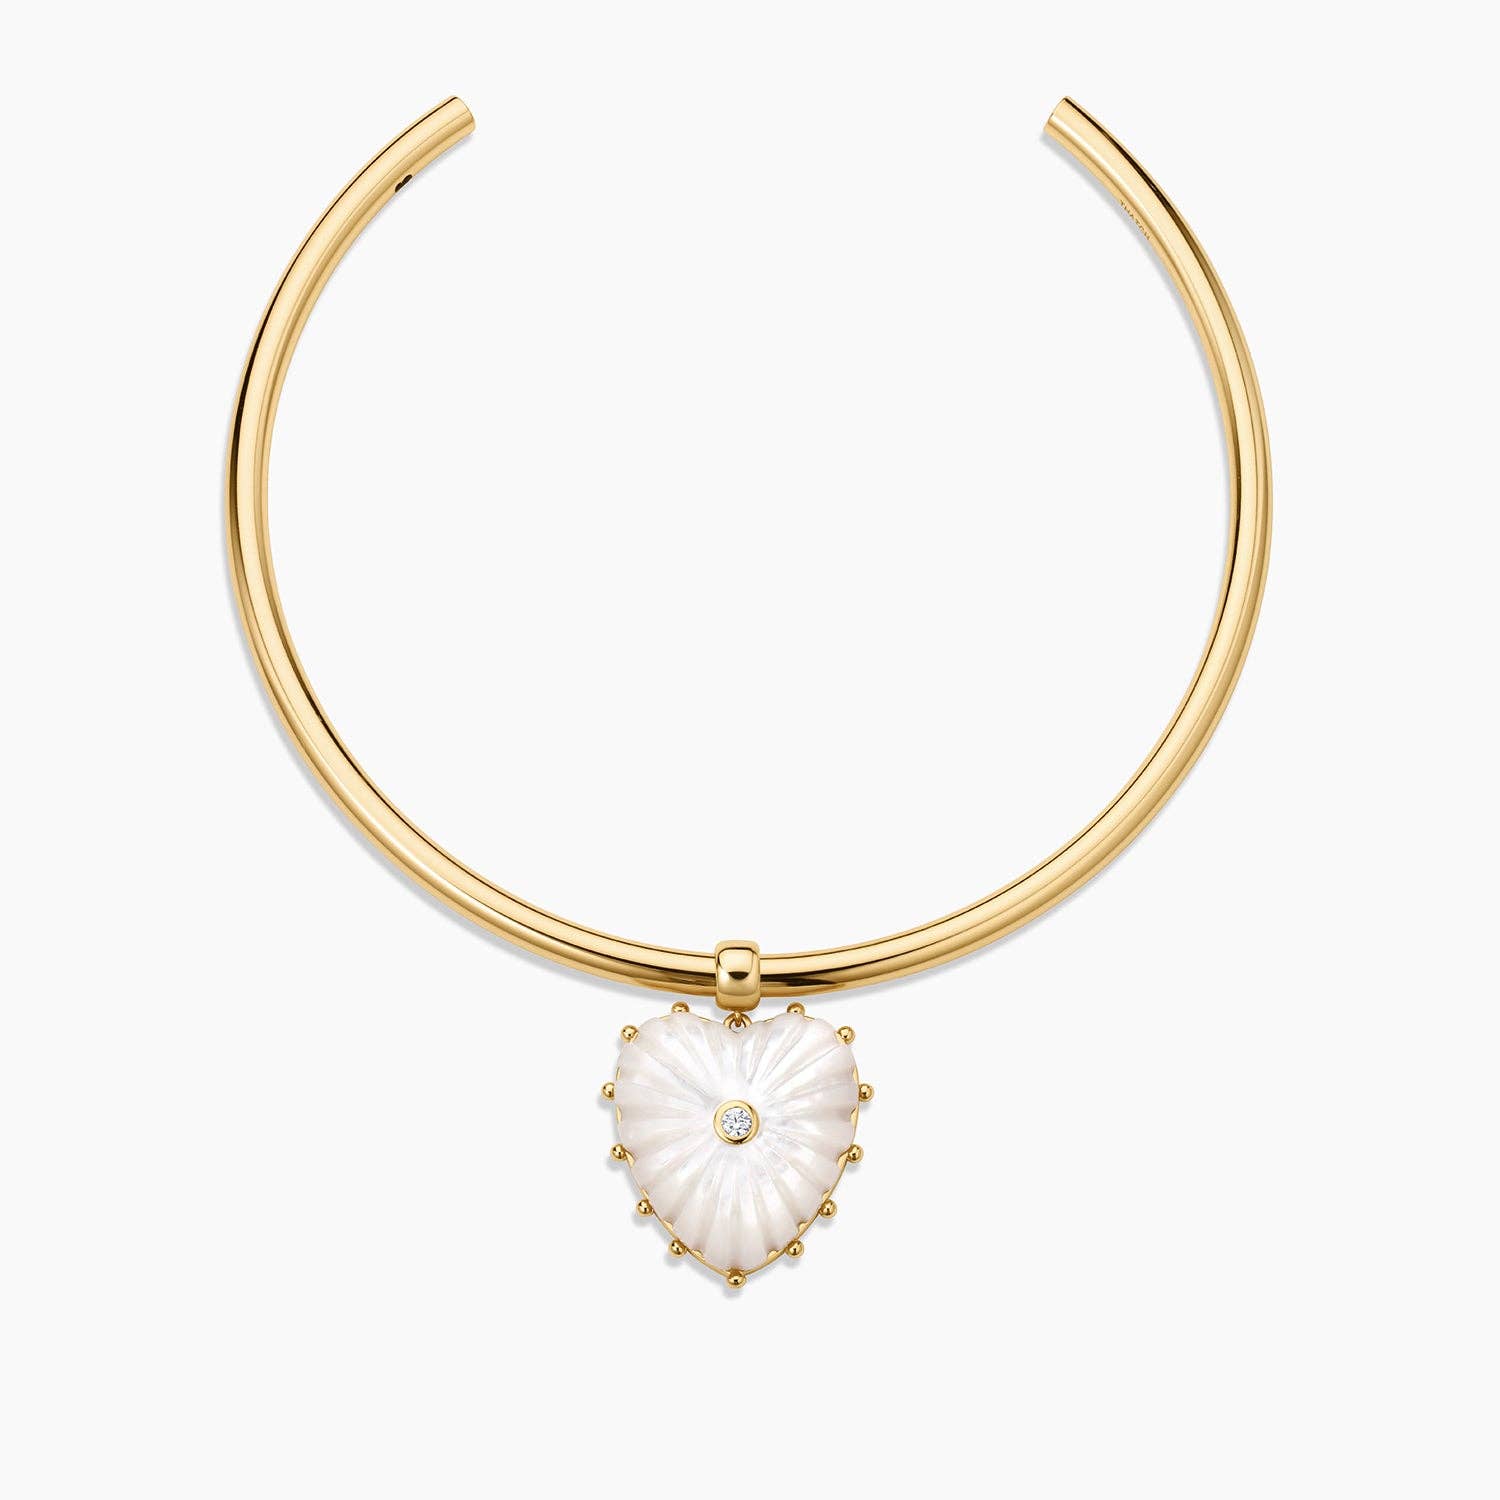 Malene Mother of Pearl Heart Choker Necklace - Abigail Fox Designs